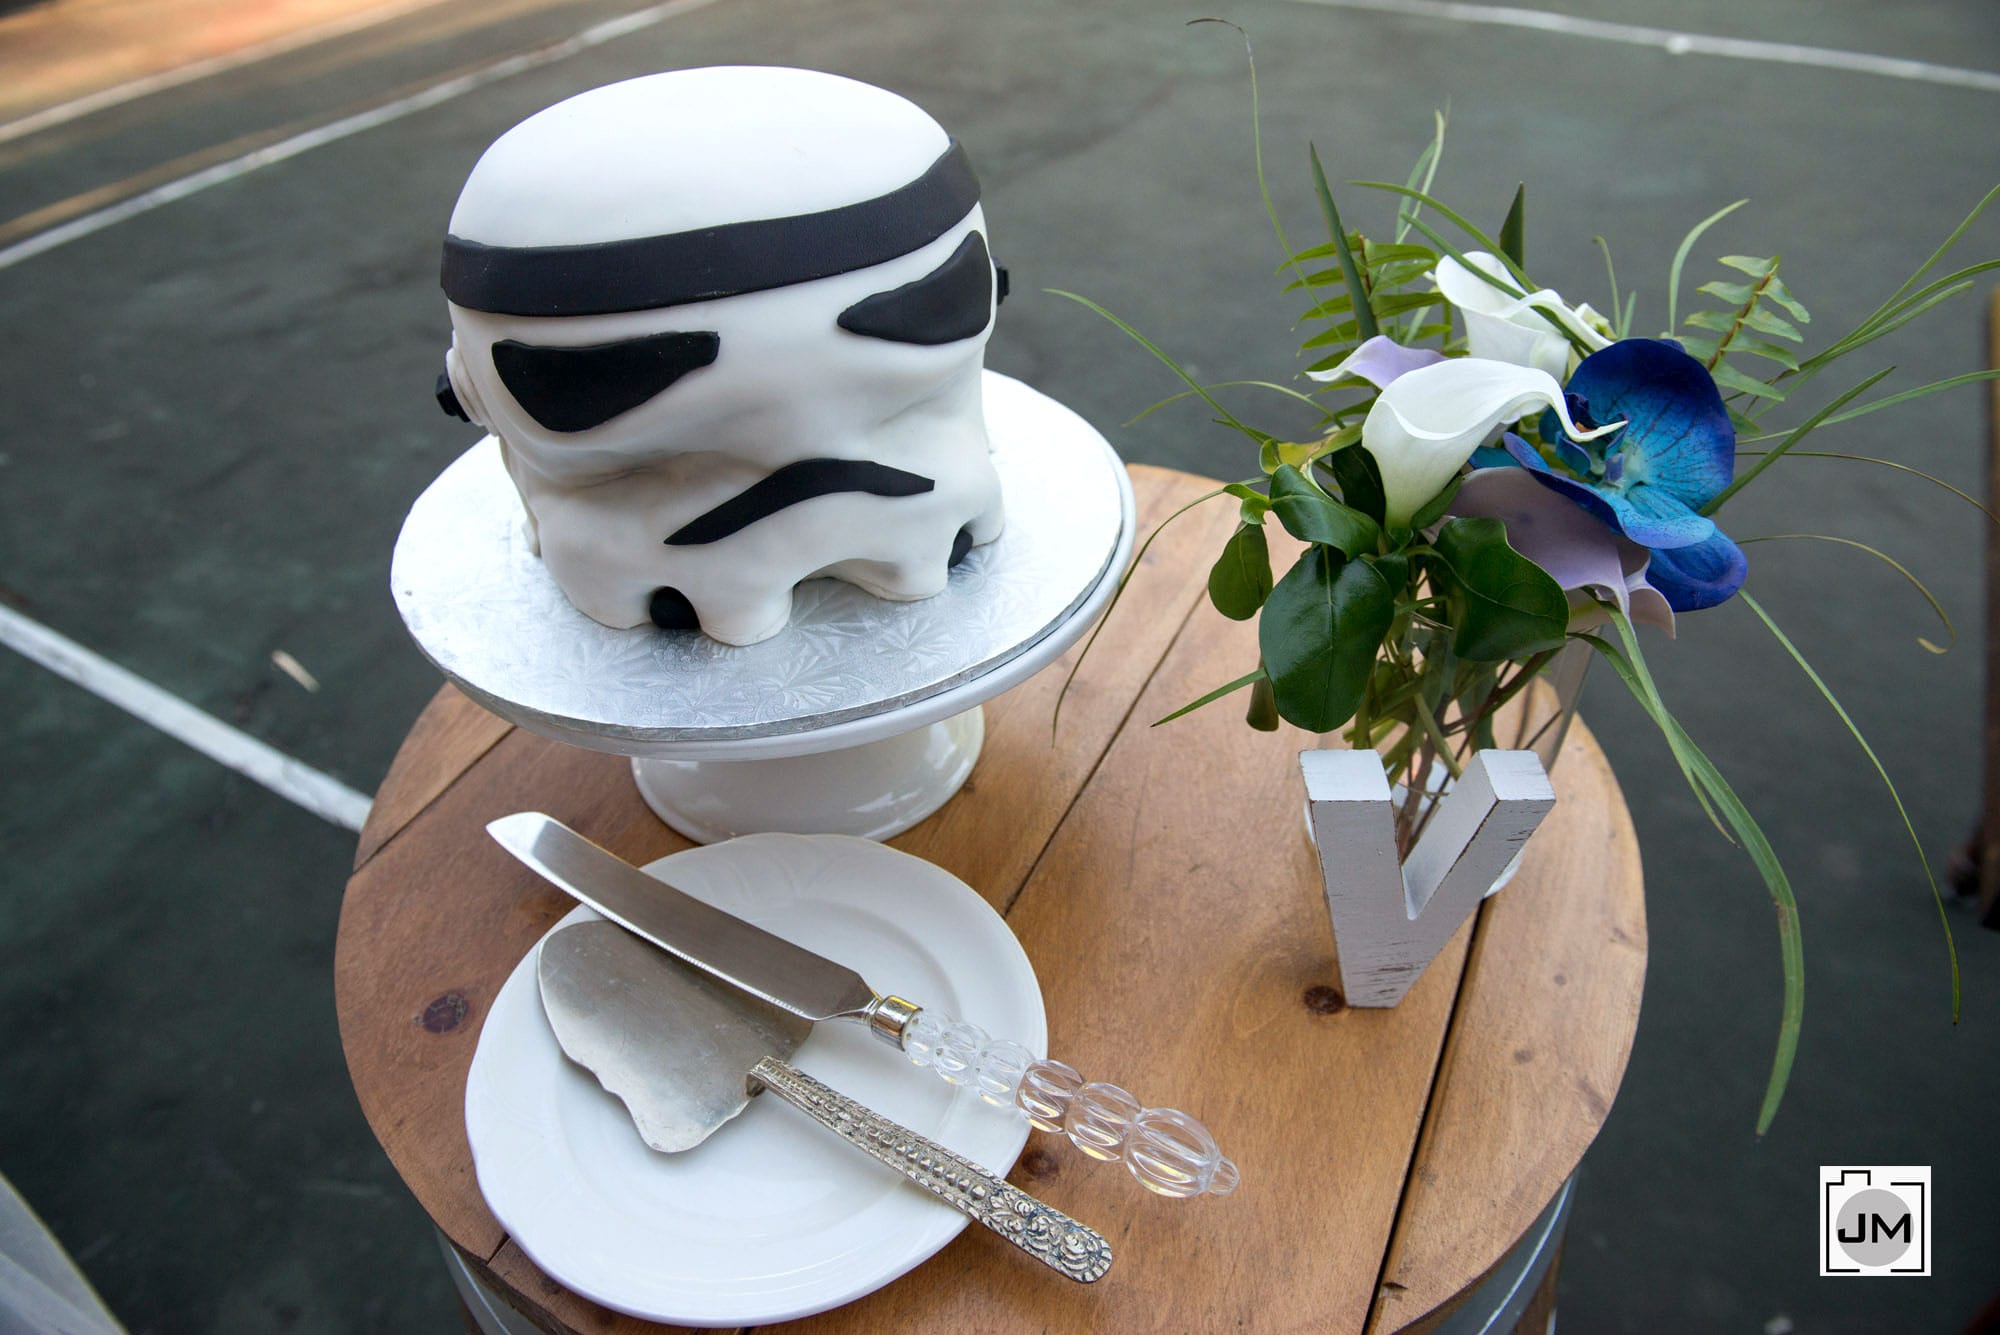 Star Wars Themed Wedding